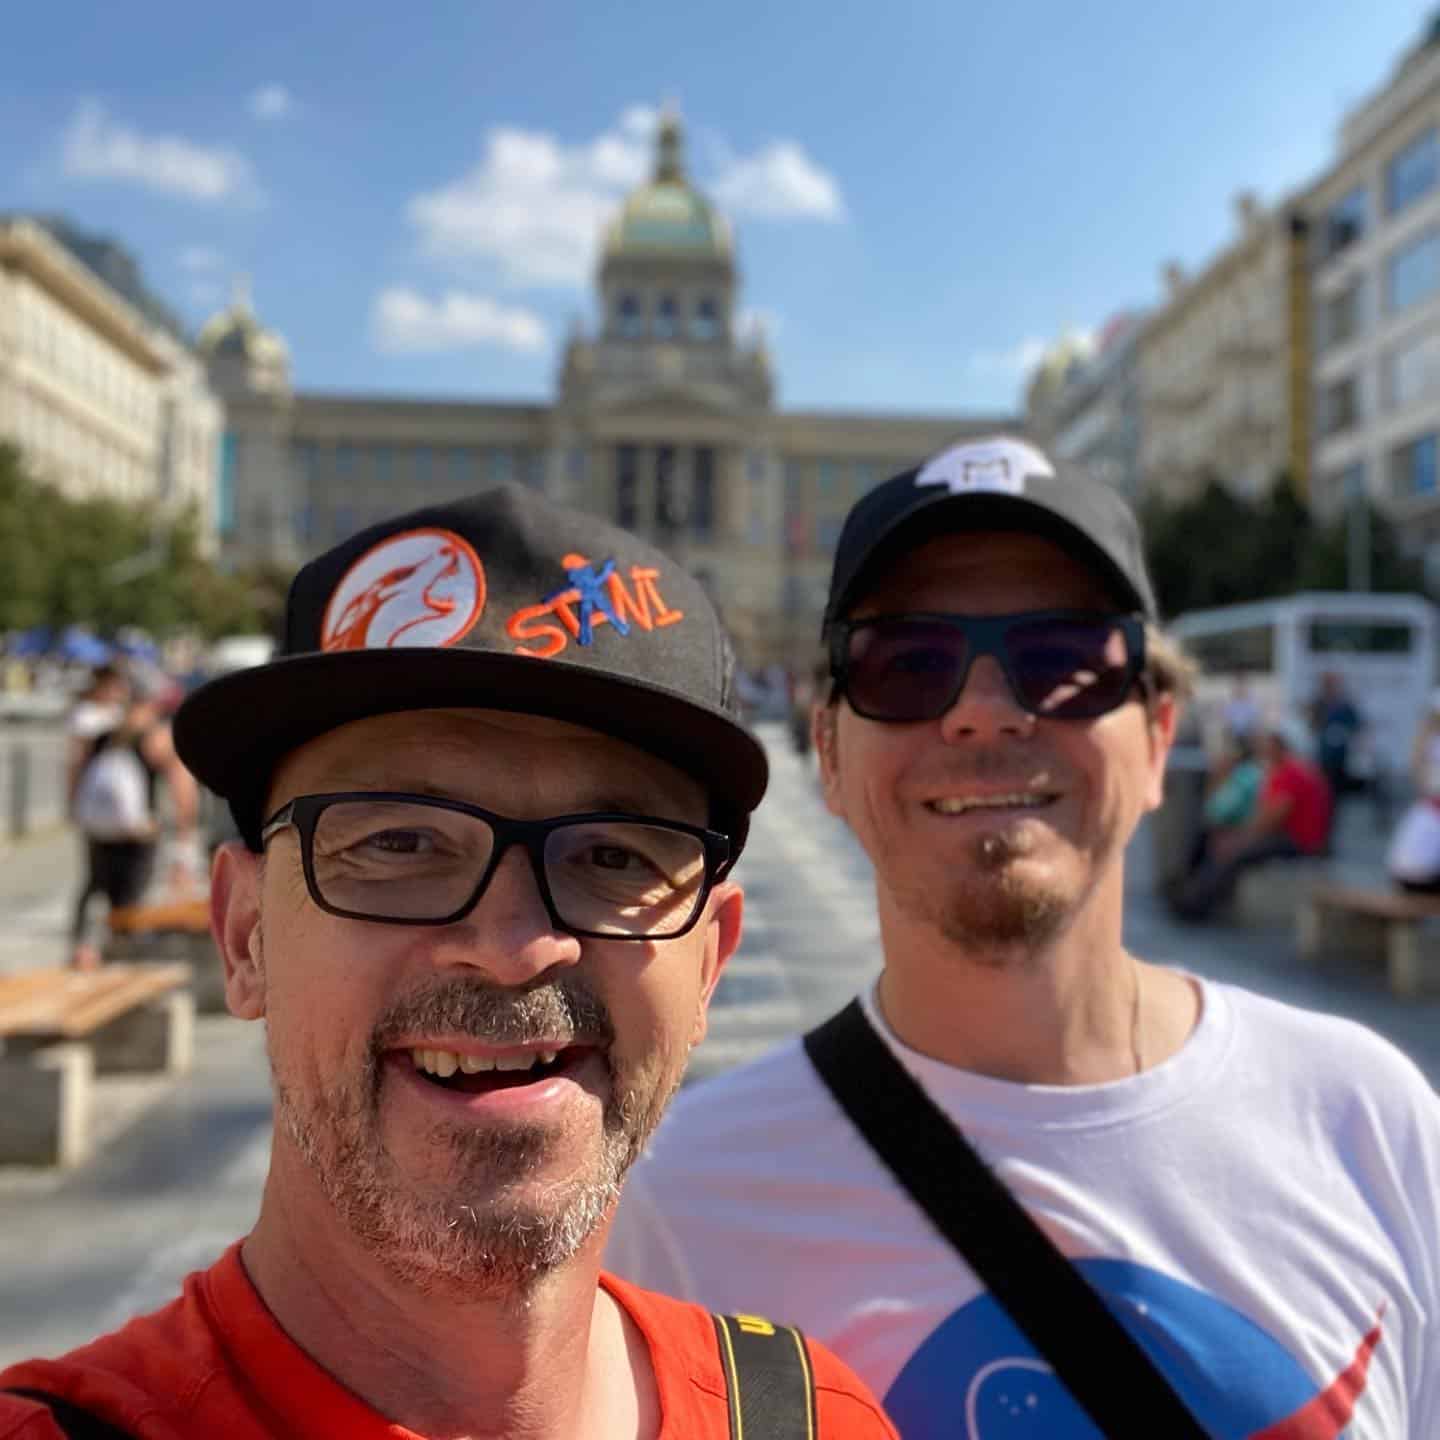 Two guys in Prague @bonzai74